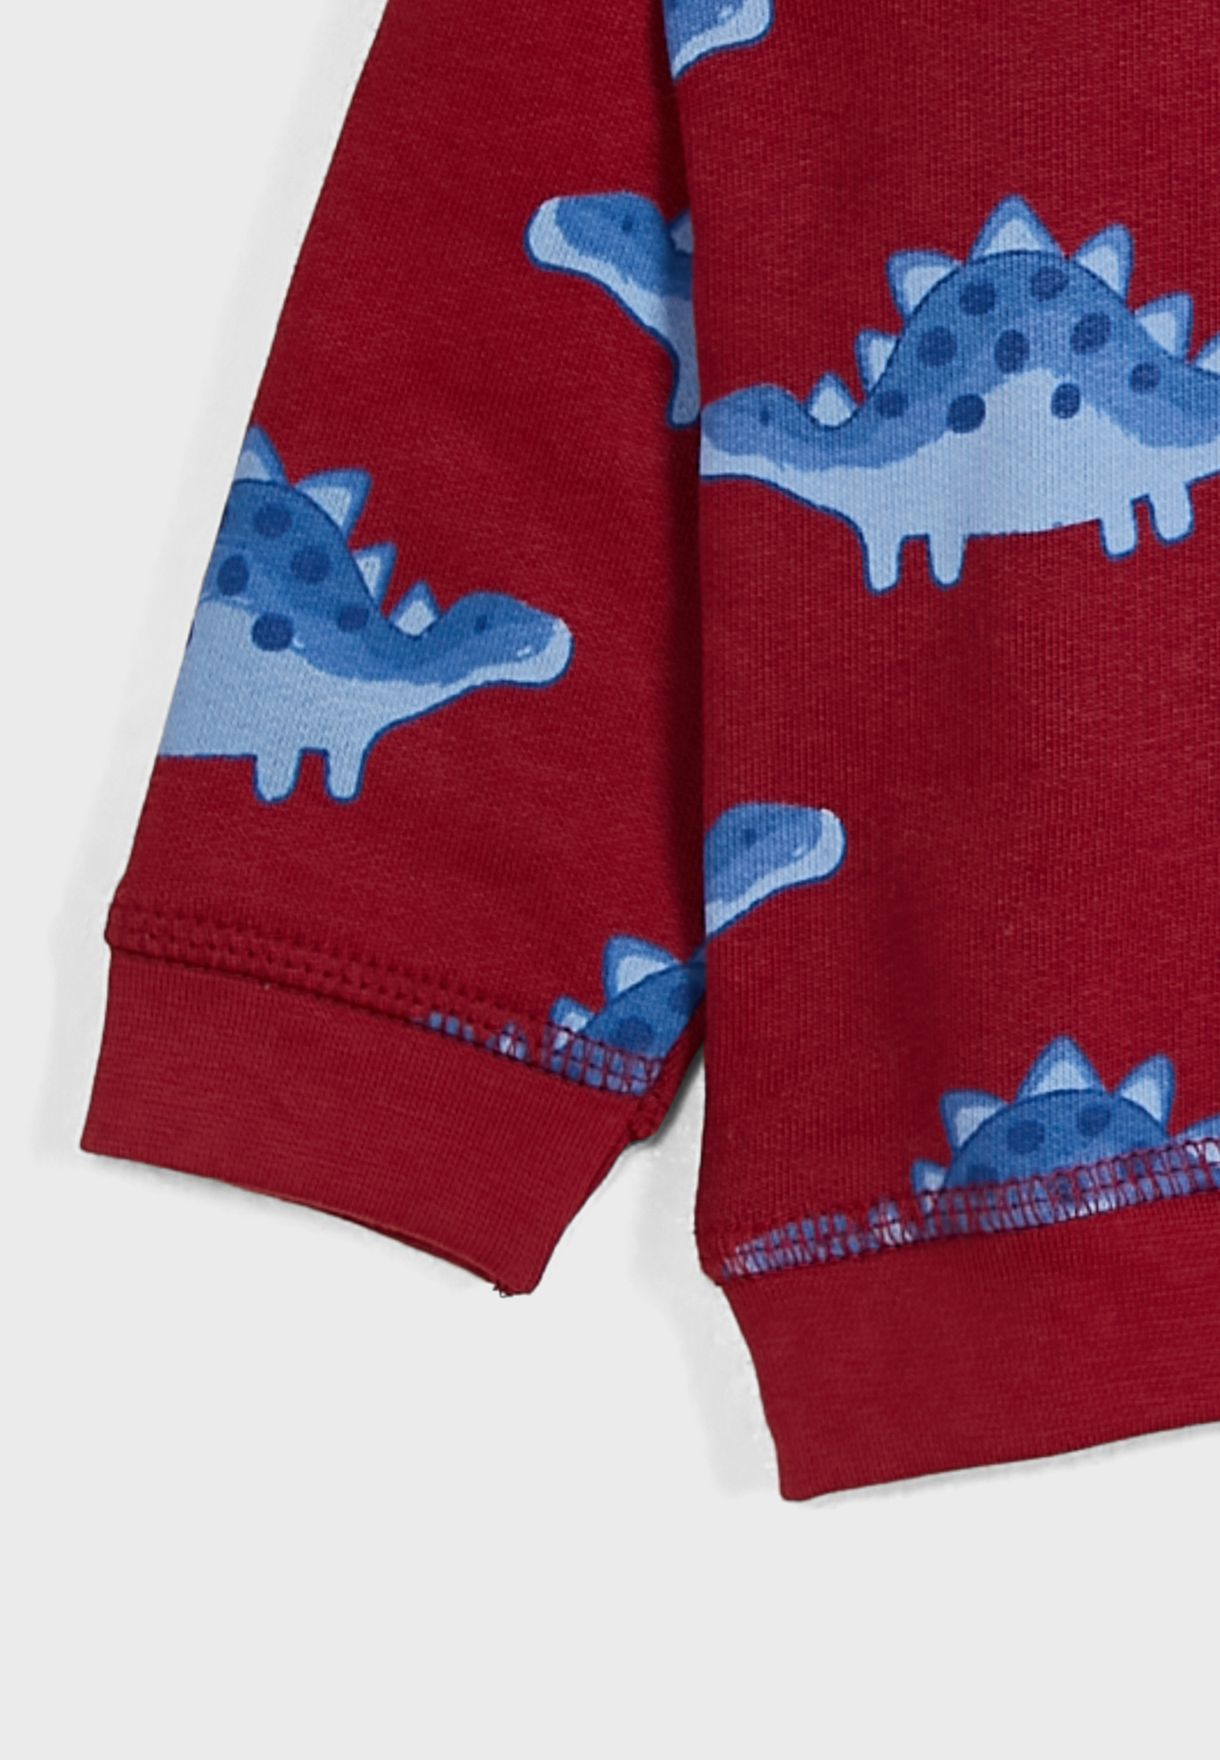 Kids Stegosaurus Print Sweatshirt